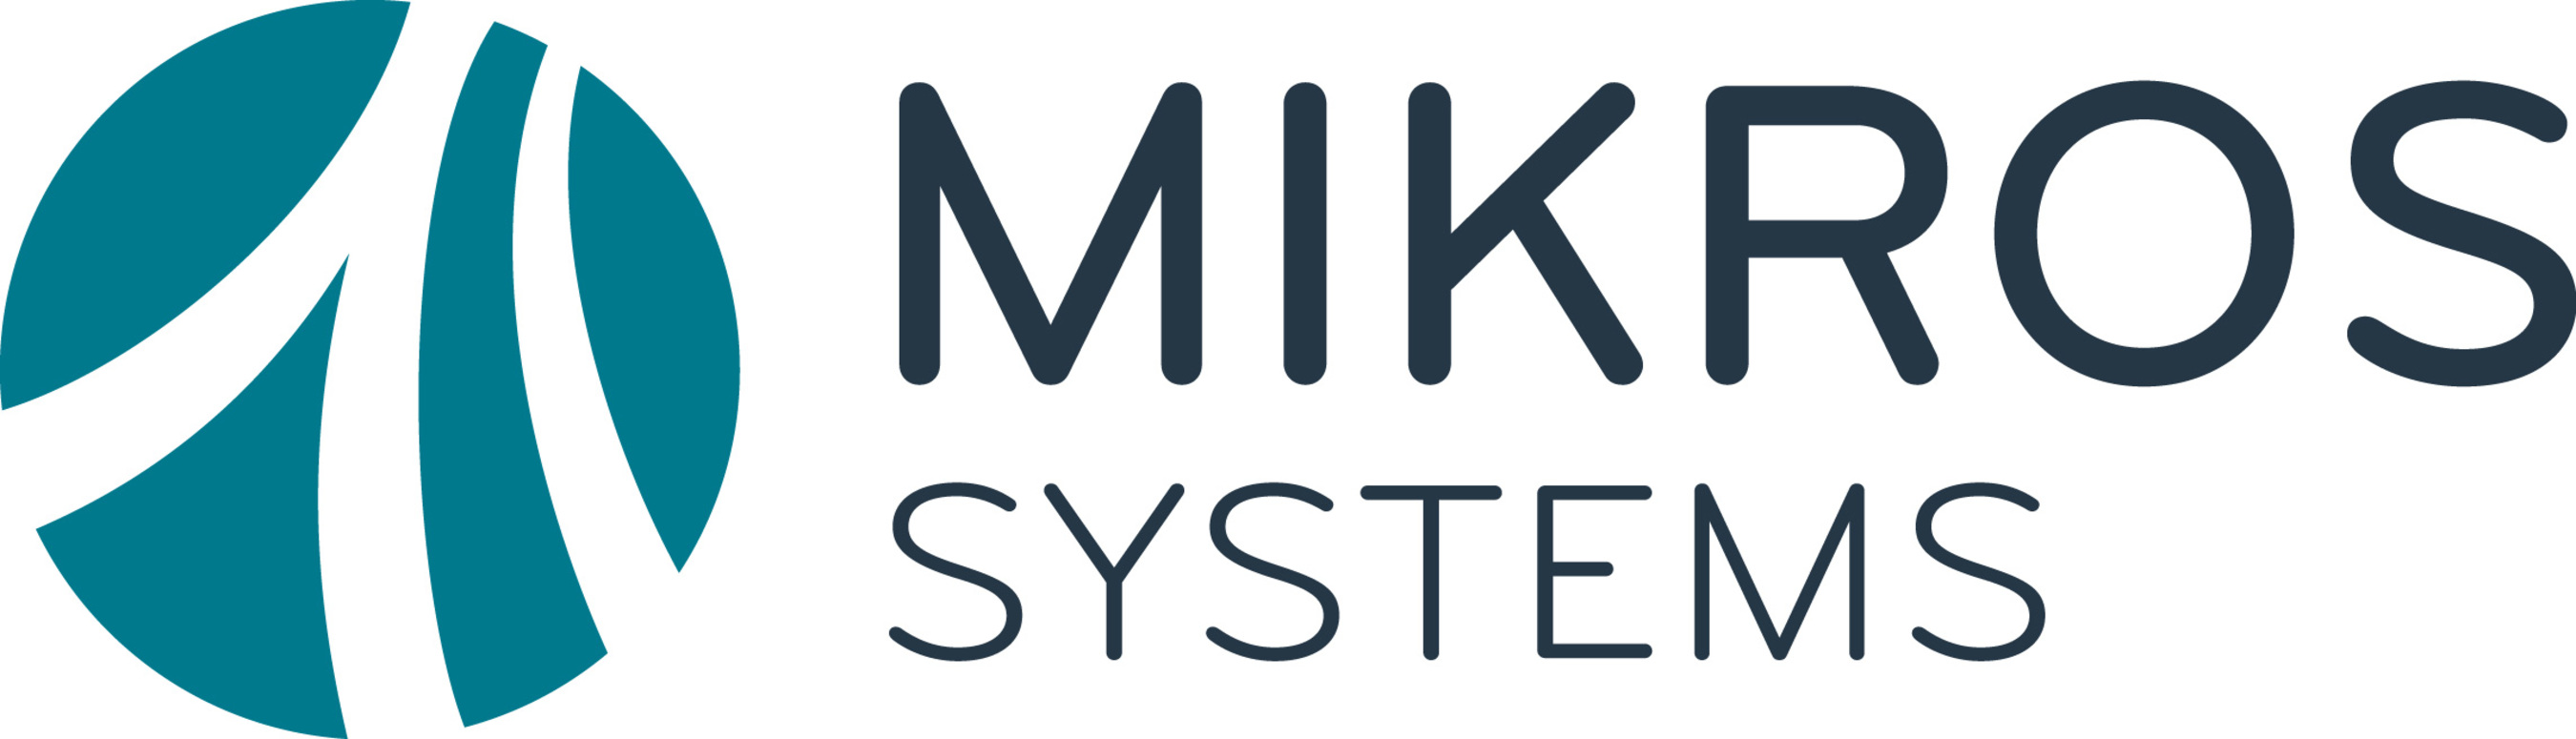 Mikros Systems Corporation logo.